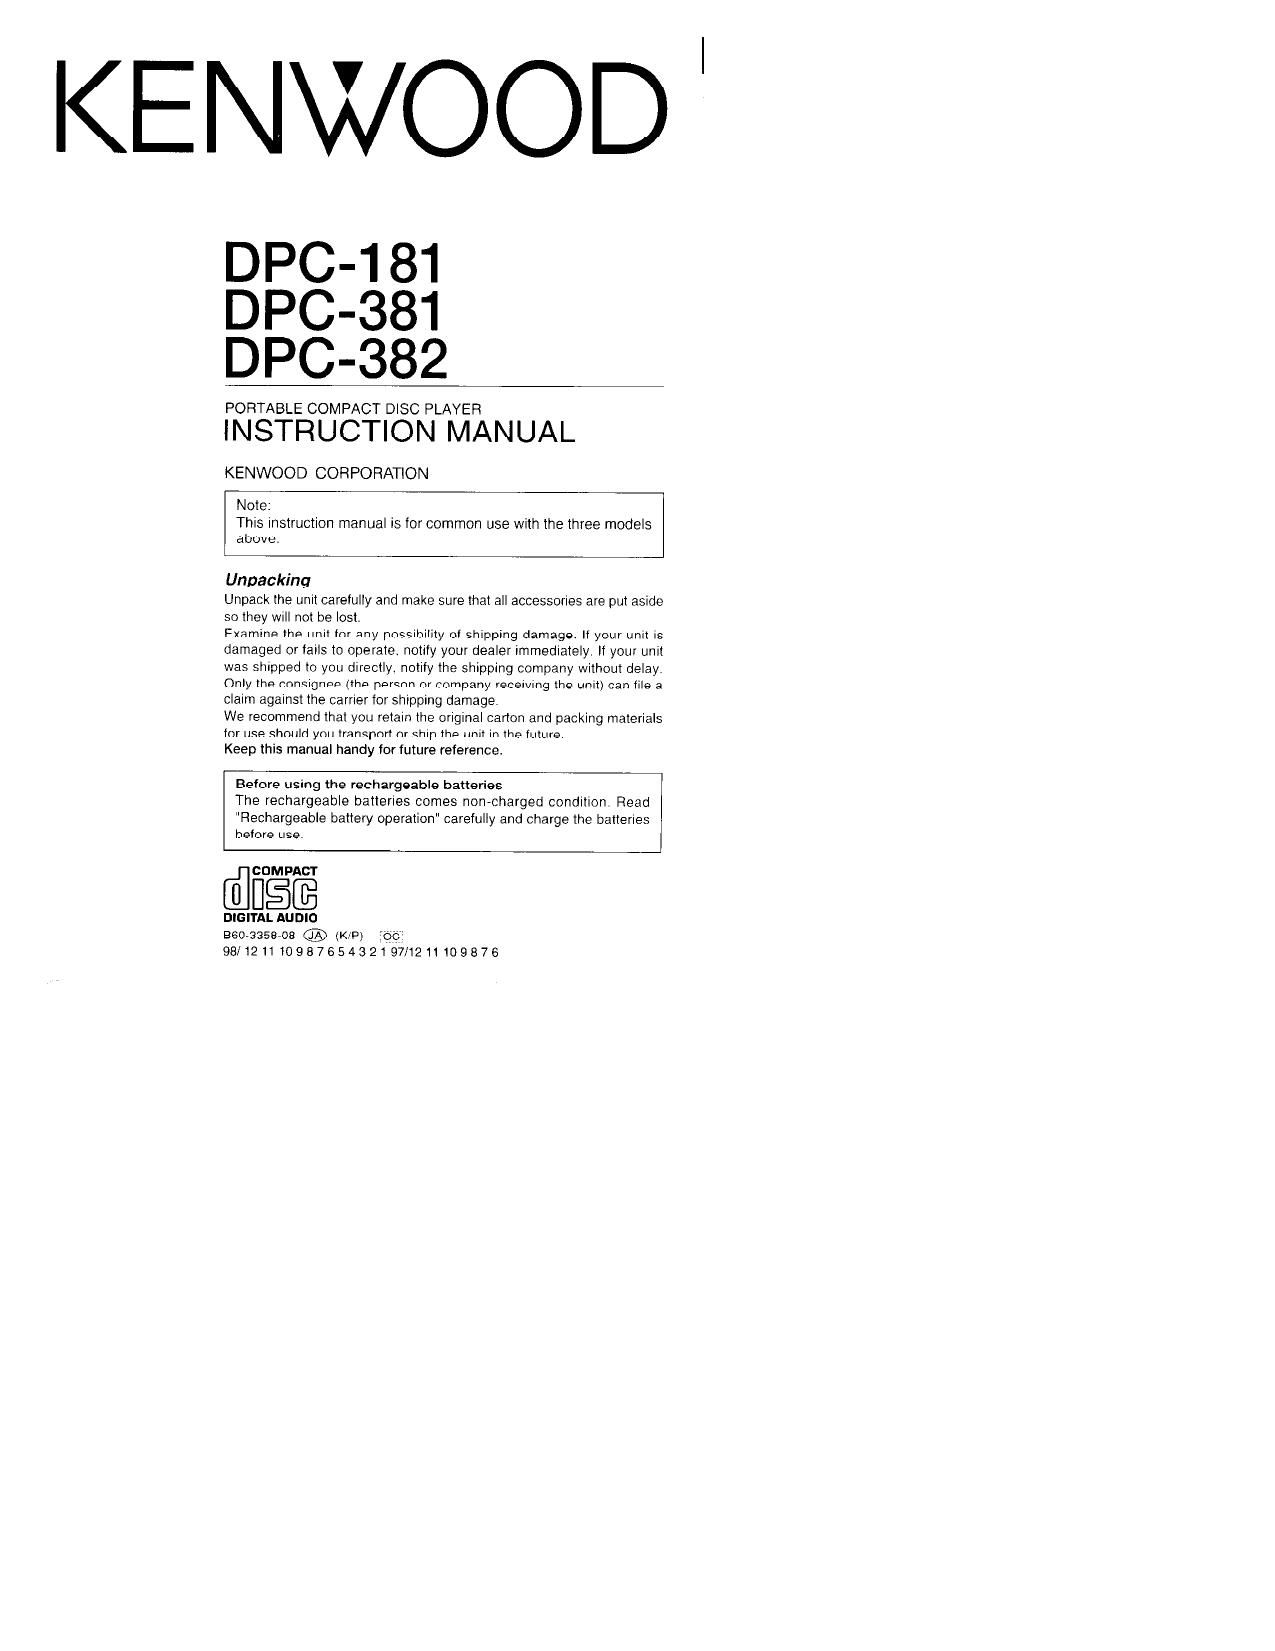 Kenwood DPC 382 Owners Manual